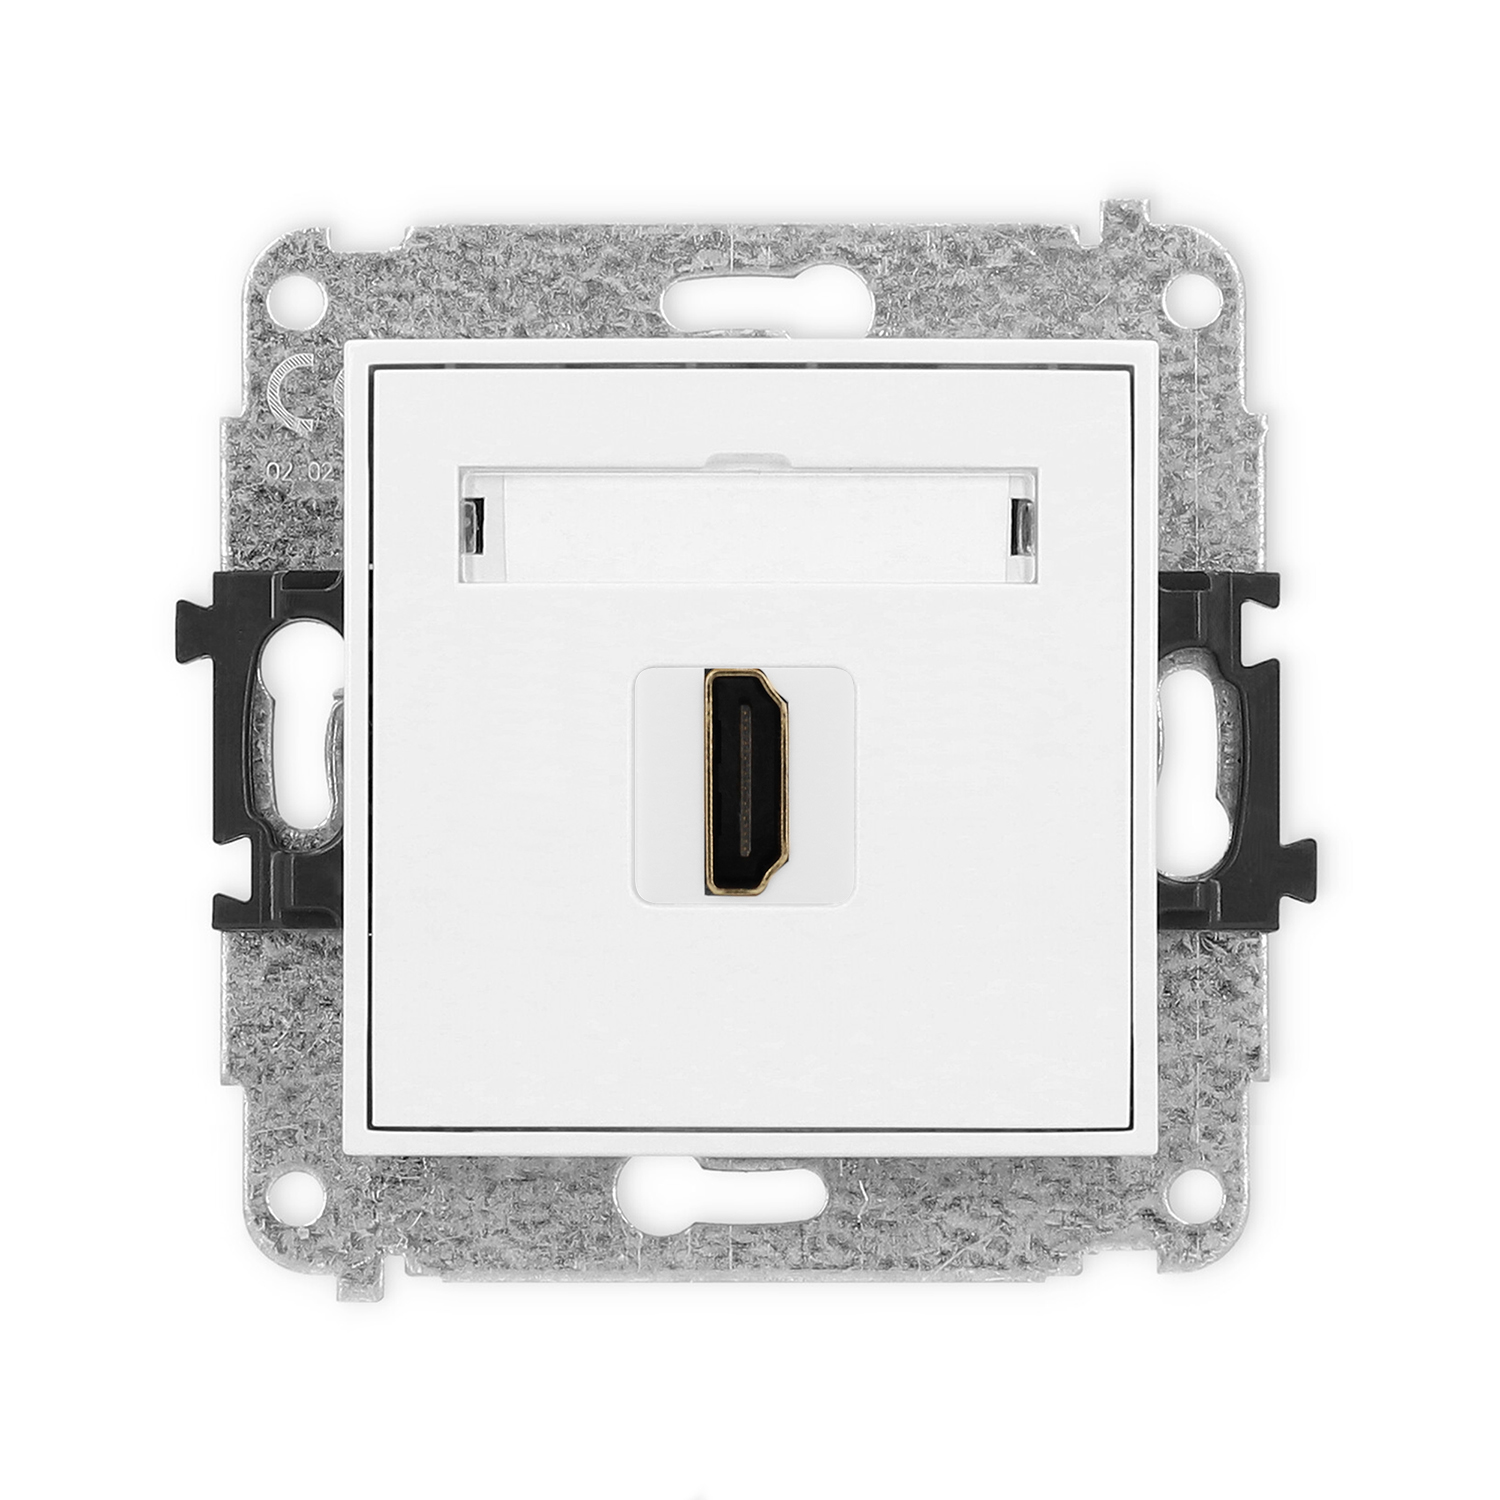 HDMI 2.0 single socket mechanism